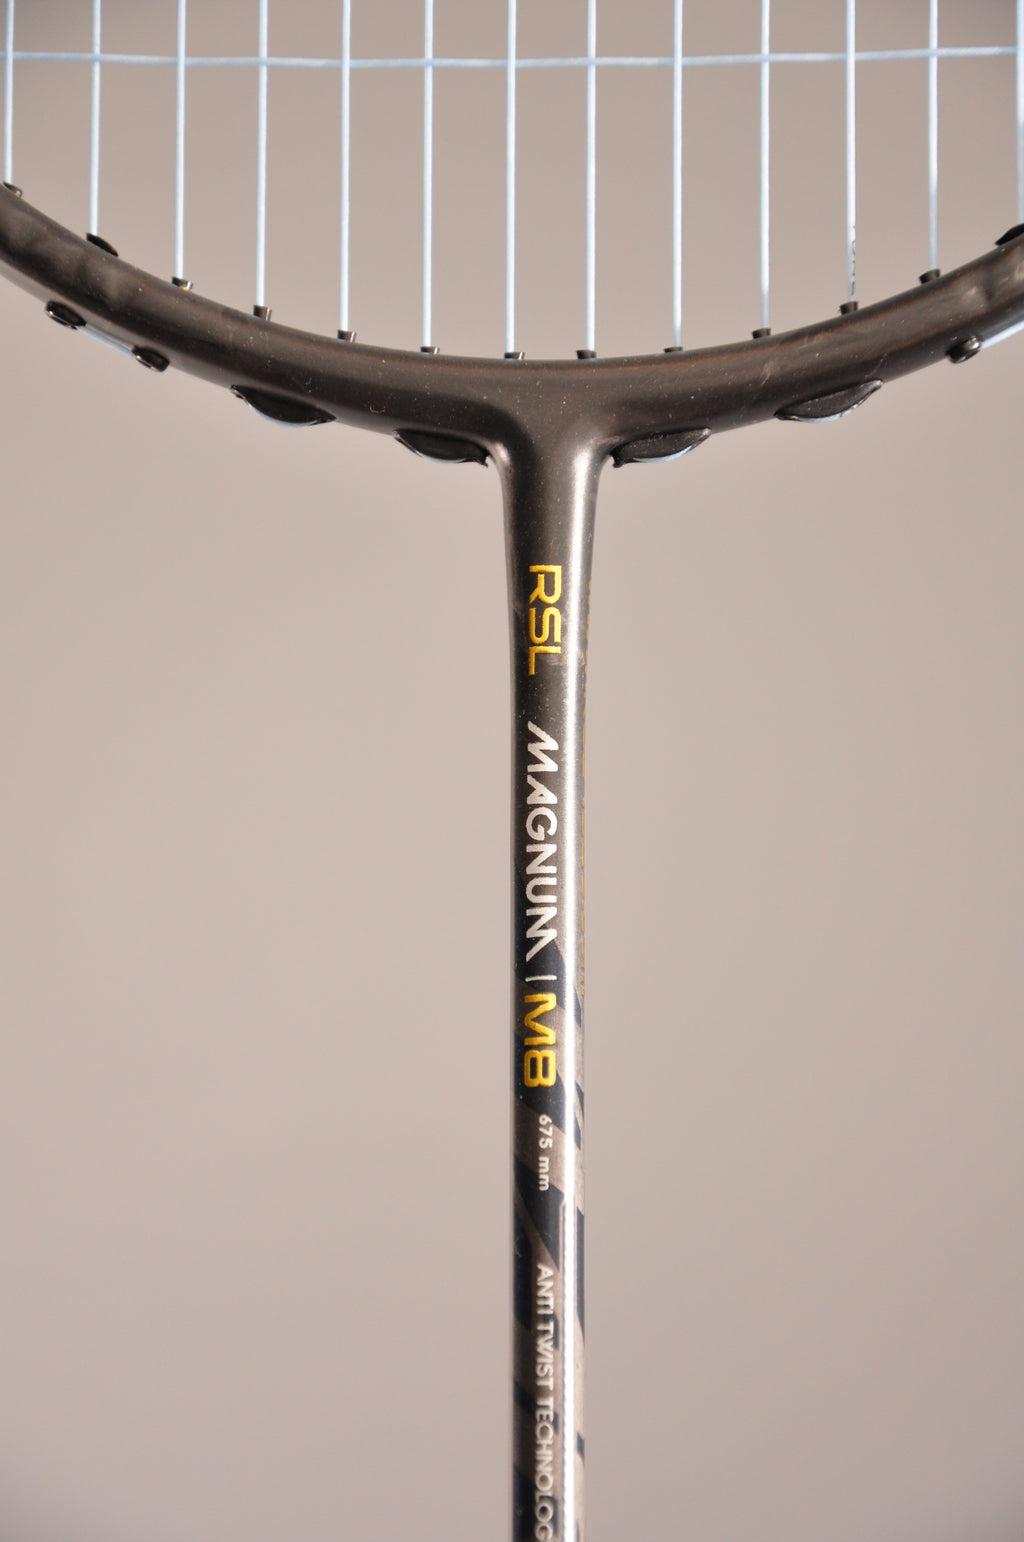 RSL Magnum M8 badminton racket, Free shorts, grip and string. - badminton racket review